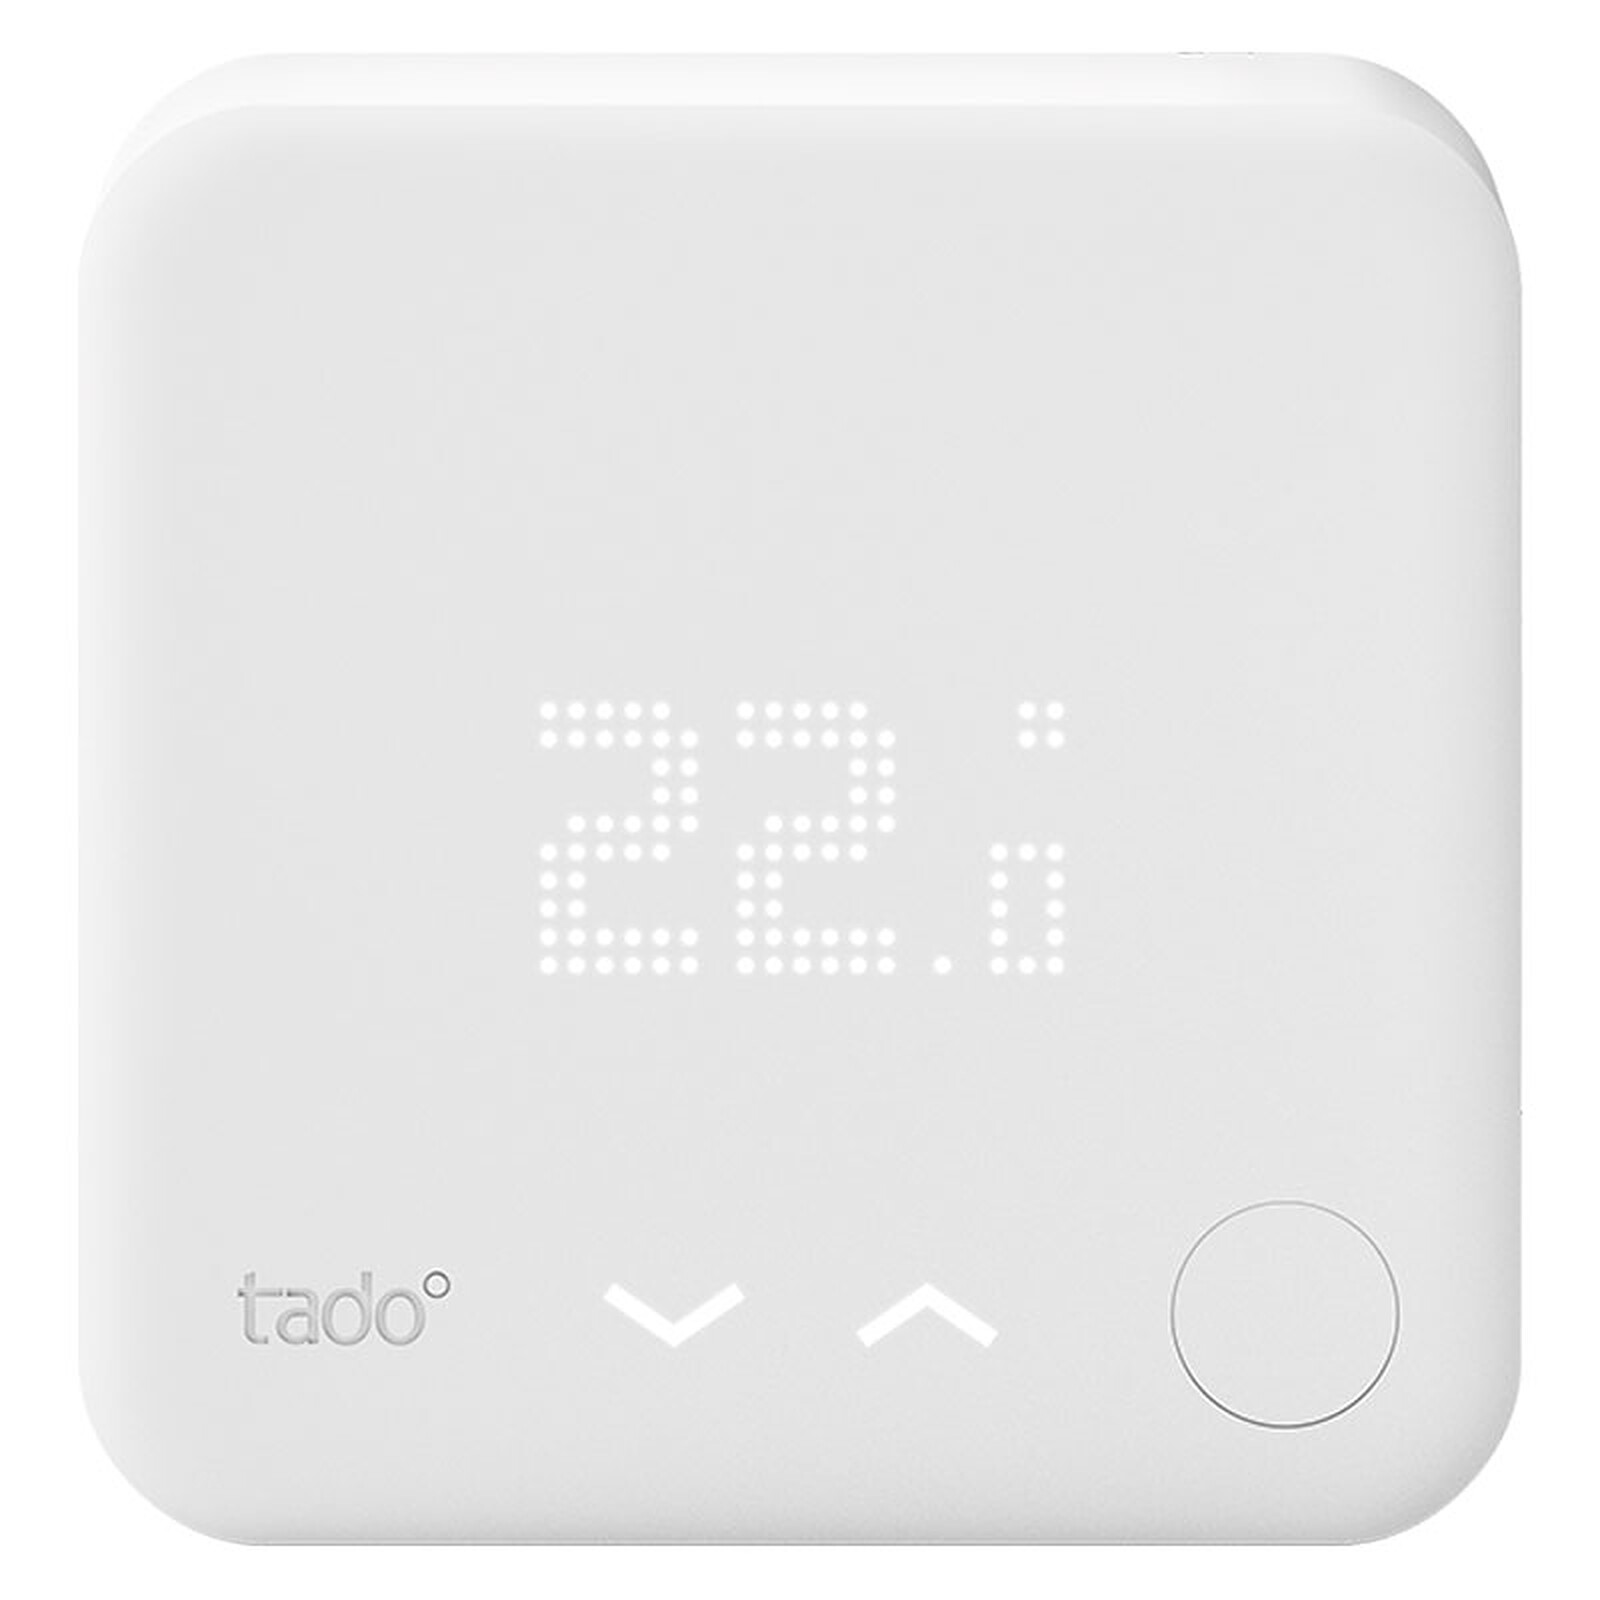 Tado Intelligent Thermostat Starter Kit v3 - Smart thermostat - LDLC 3-year  warranty